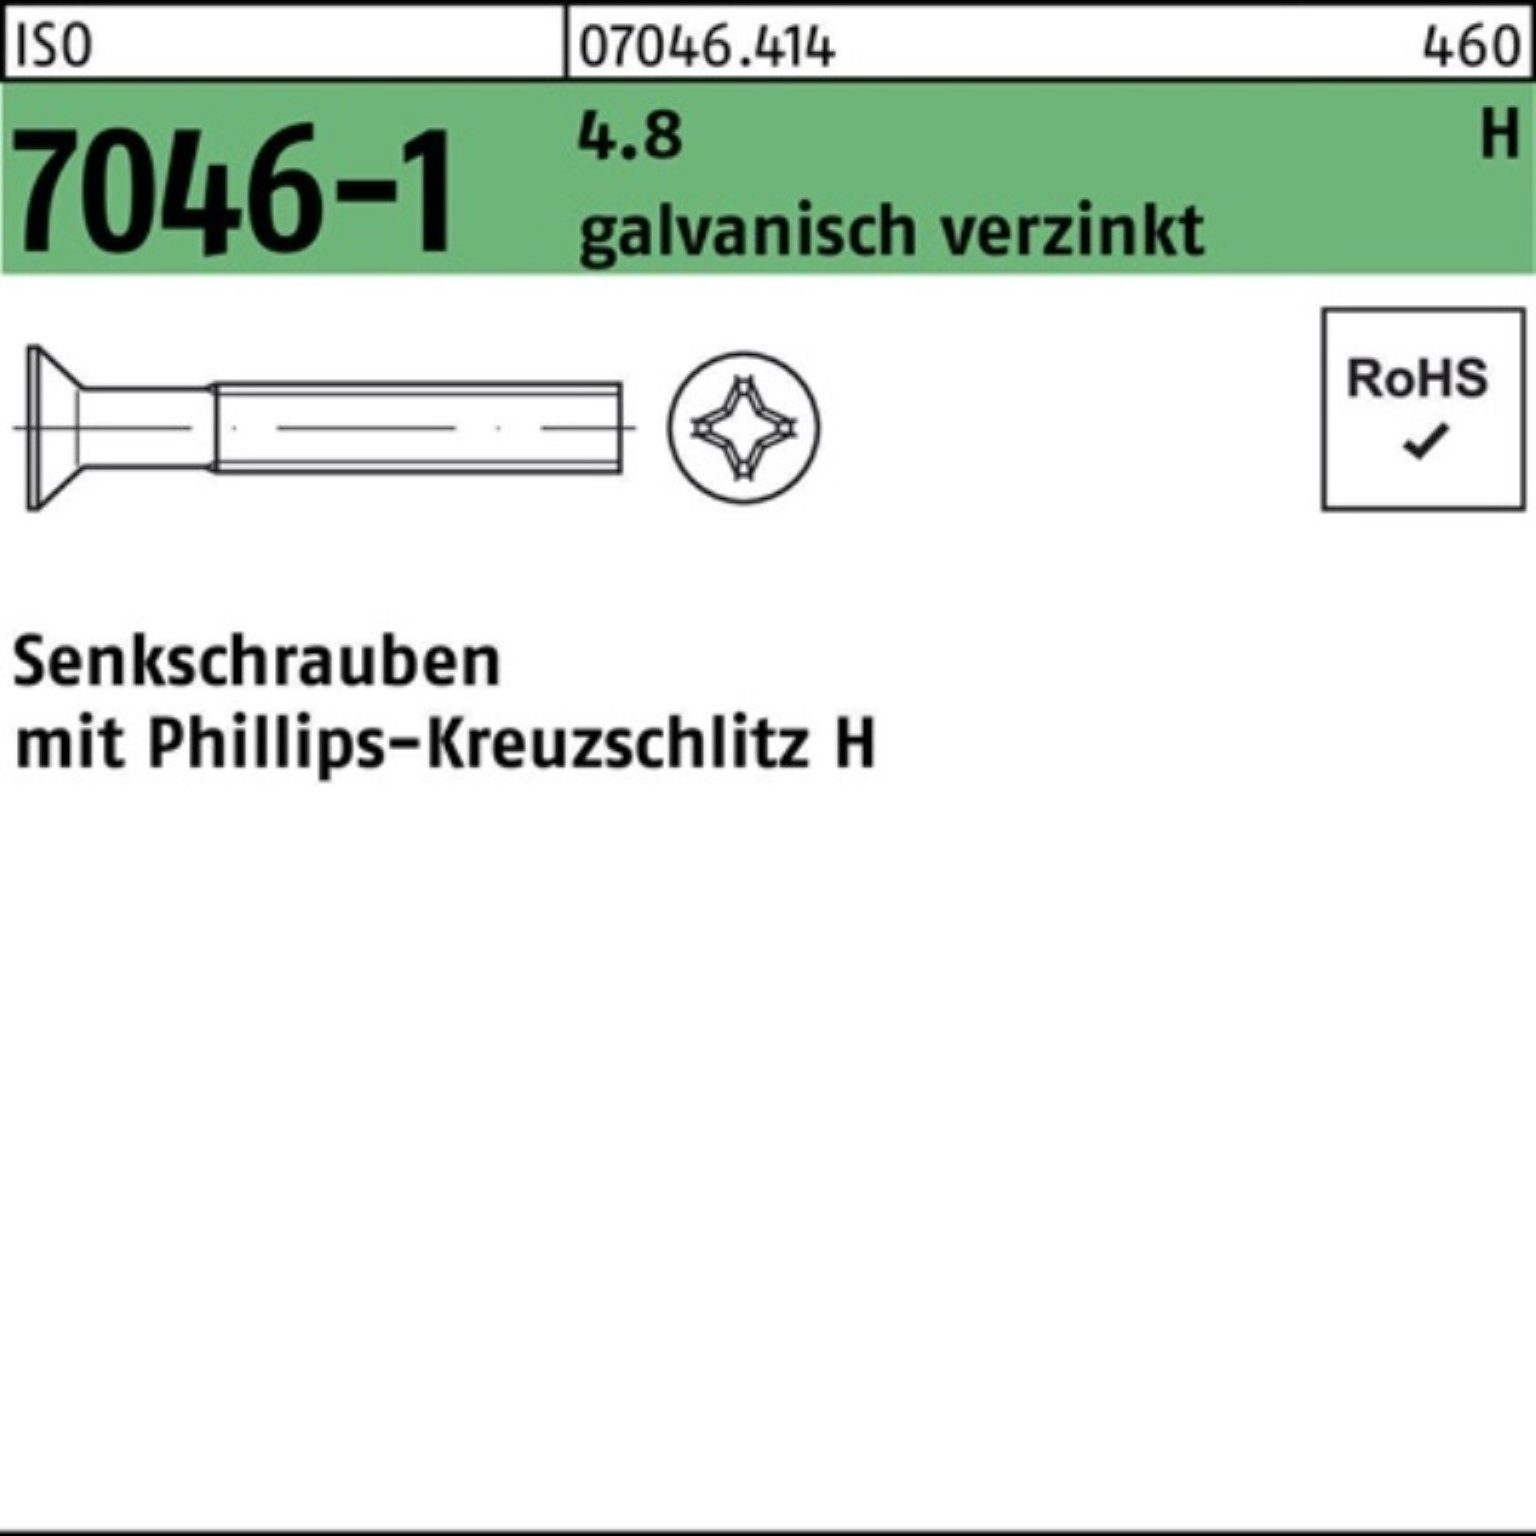 Senkschraube 4.8 PH 200er ISO Pack Senkschraube Reyher 7046-1 galv.verz. M3x14-H 200St. IS